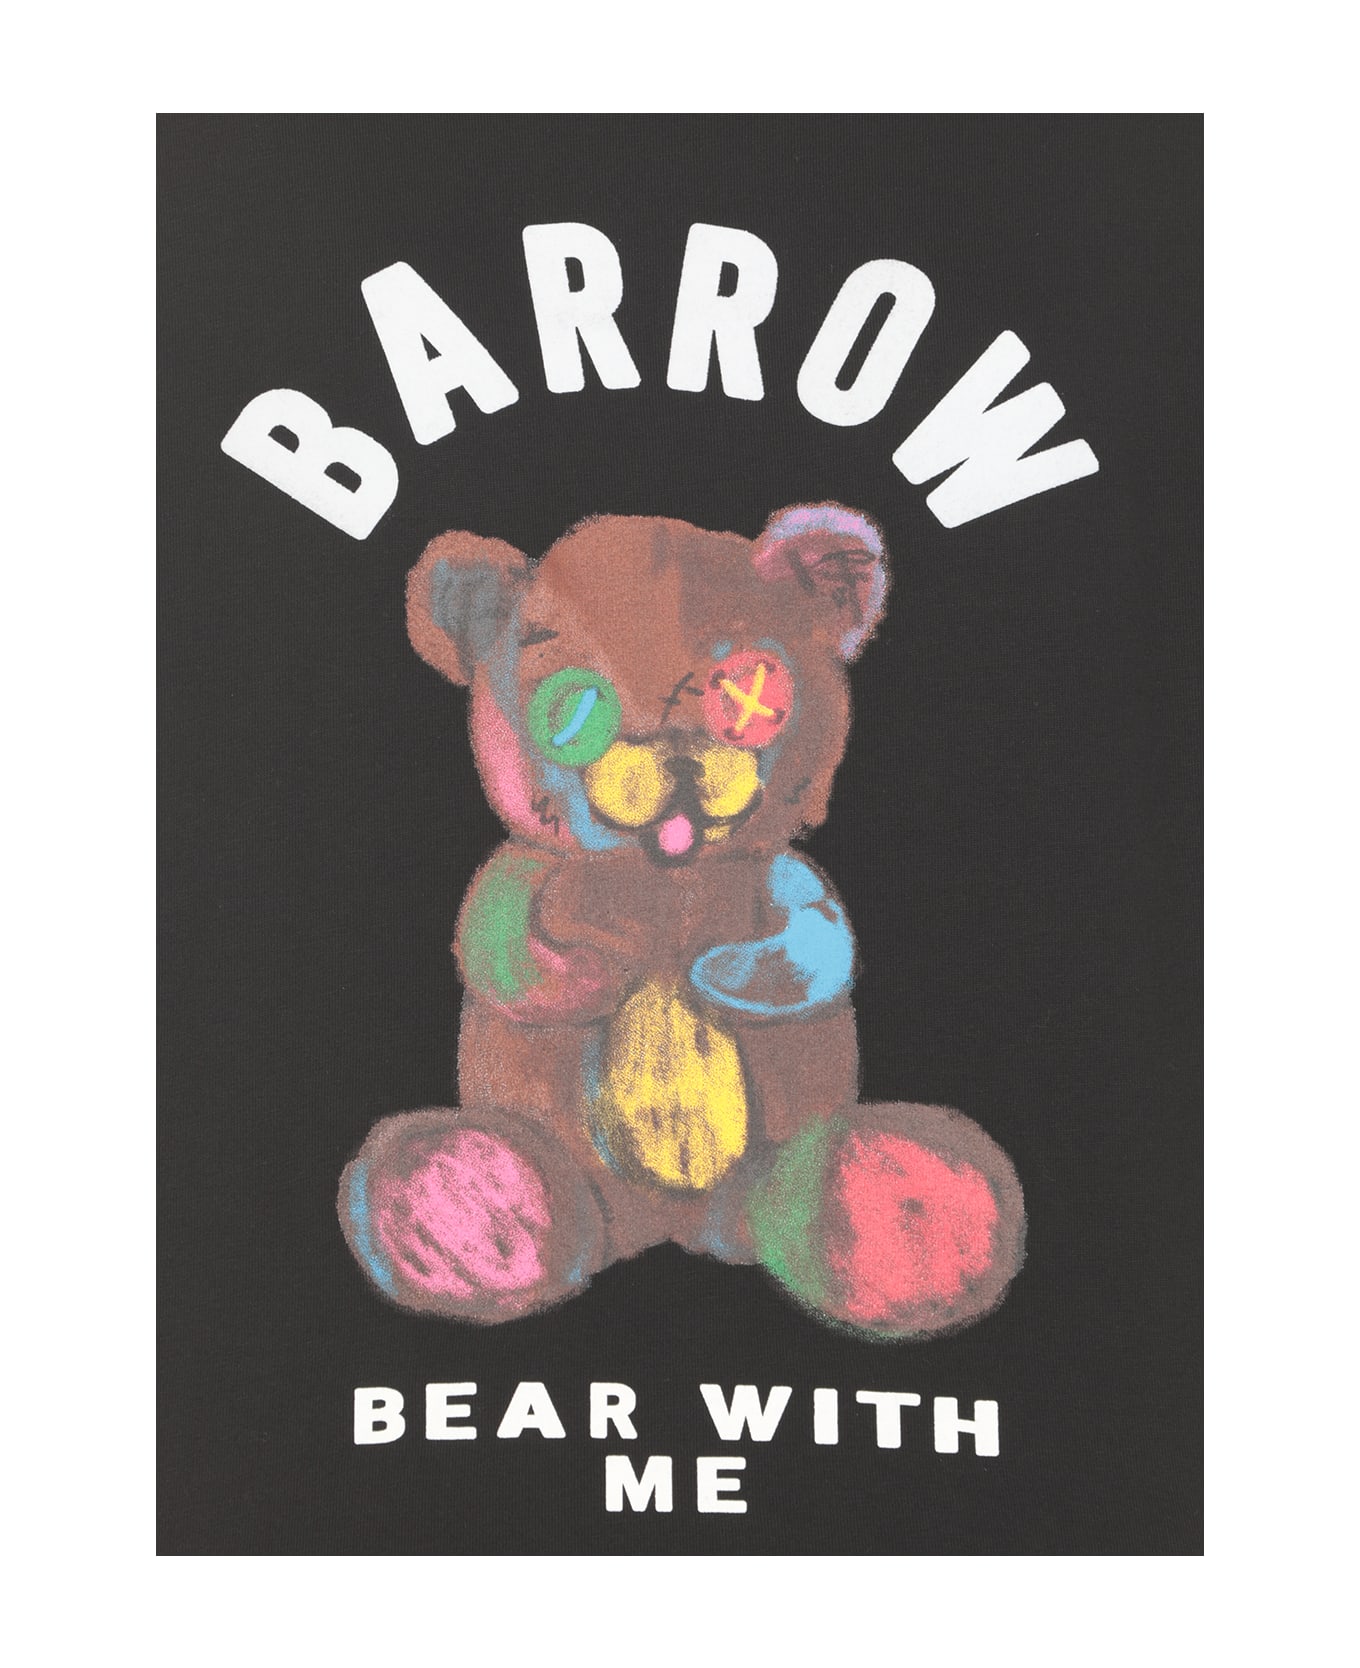 Barrow T-shirt - Black Tシャツ